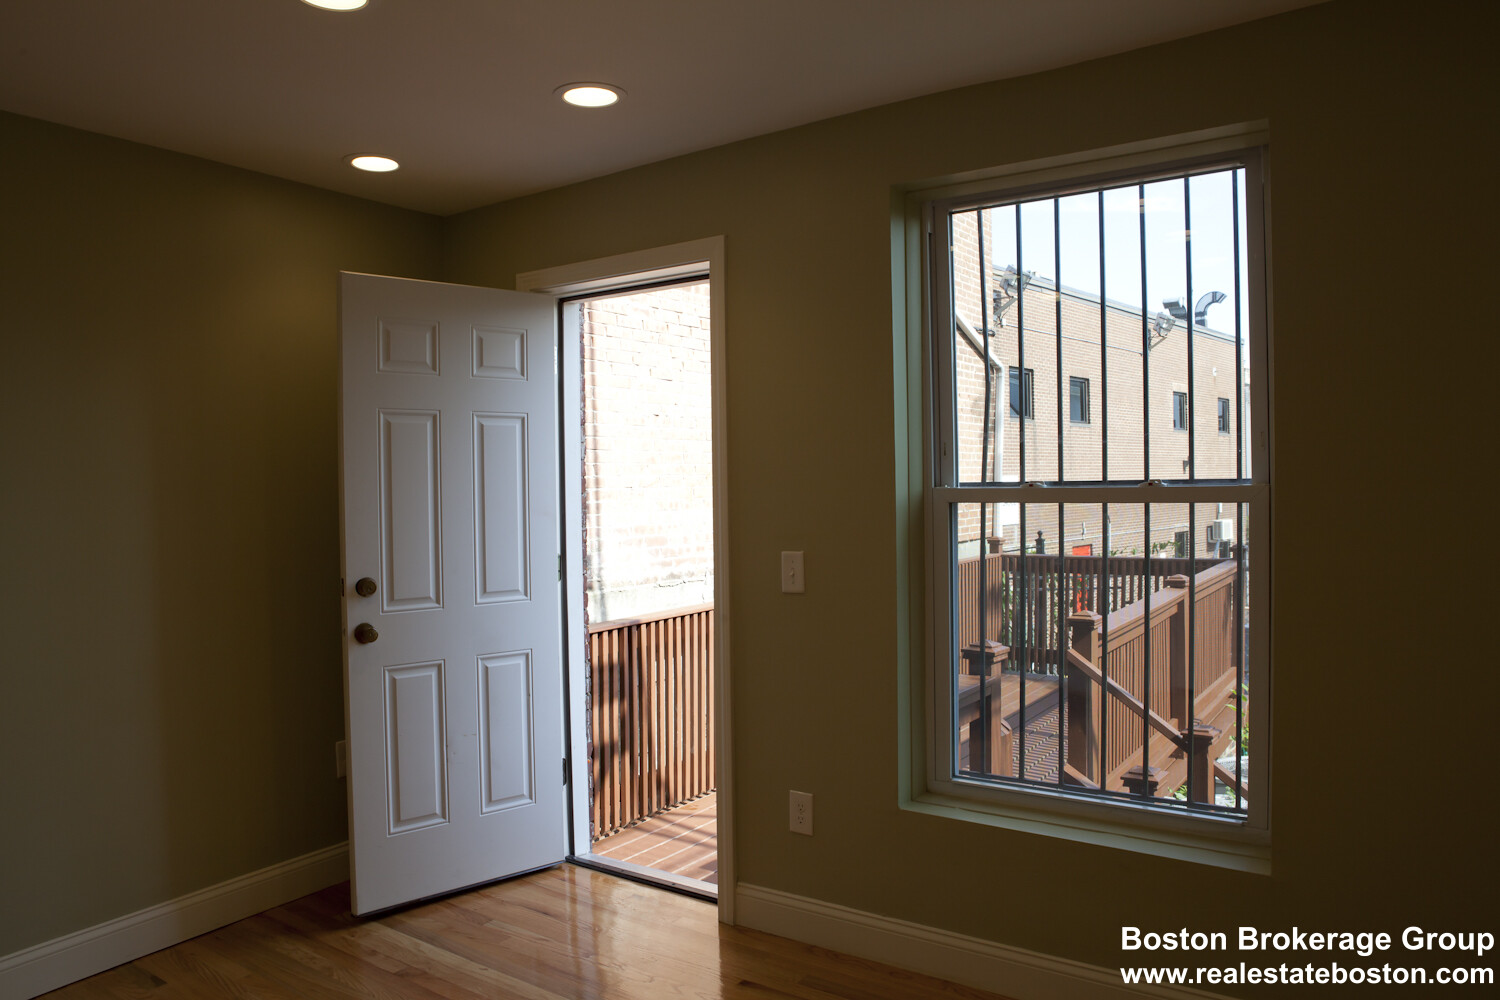 Photos of apartment on Kearsarge,Boston MA 02119